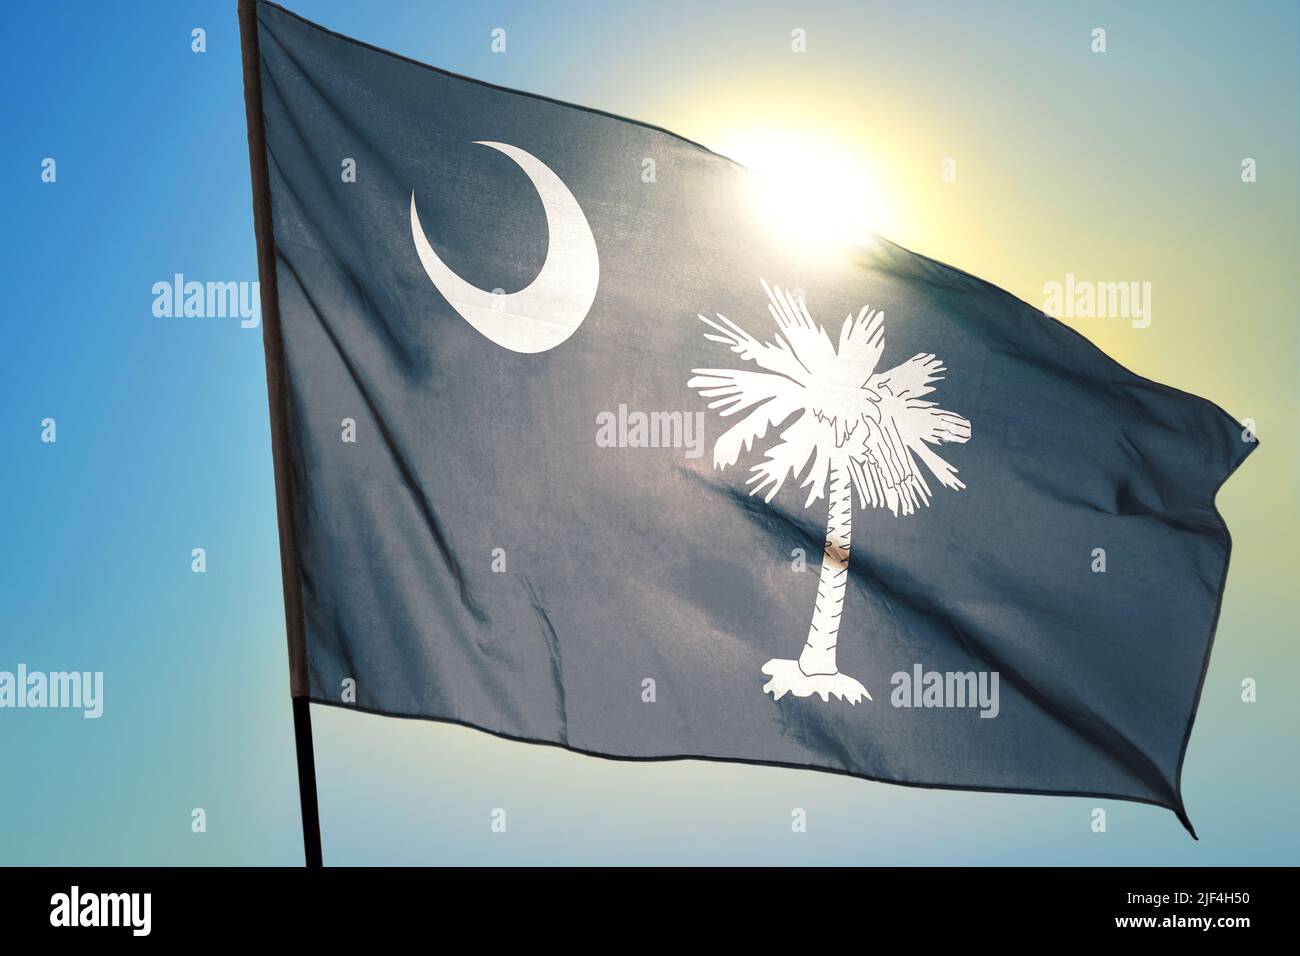 South Carolina state of United States flag waving on the wind Stock Photo